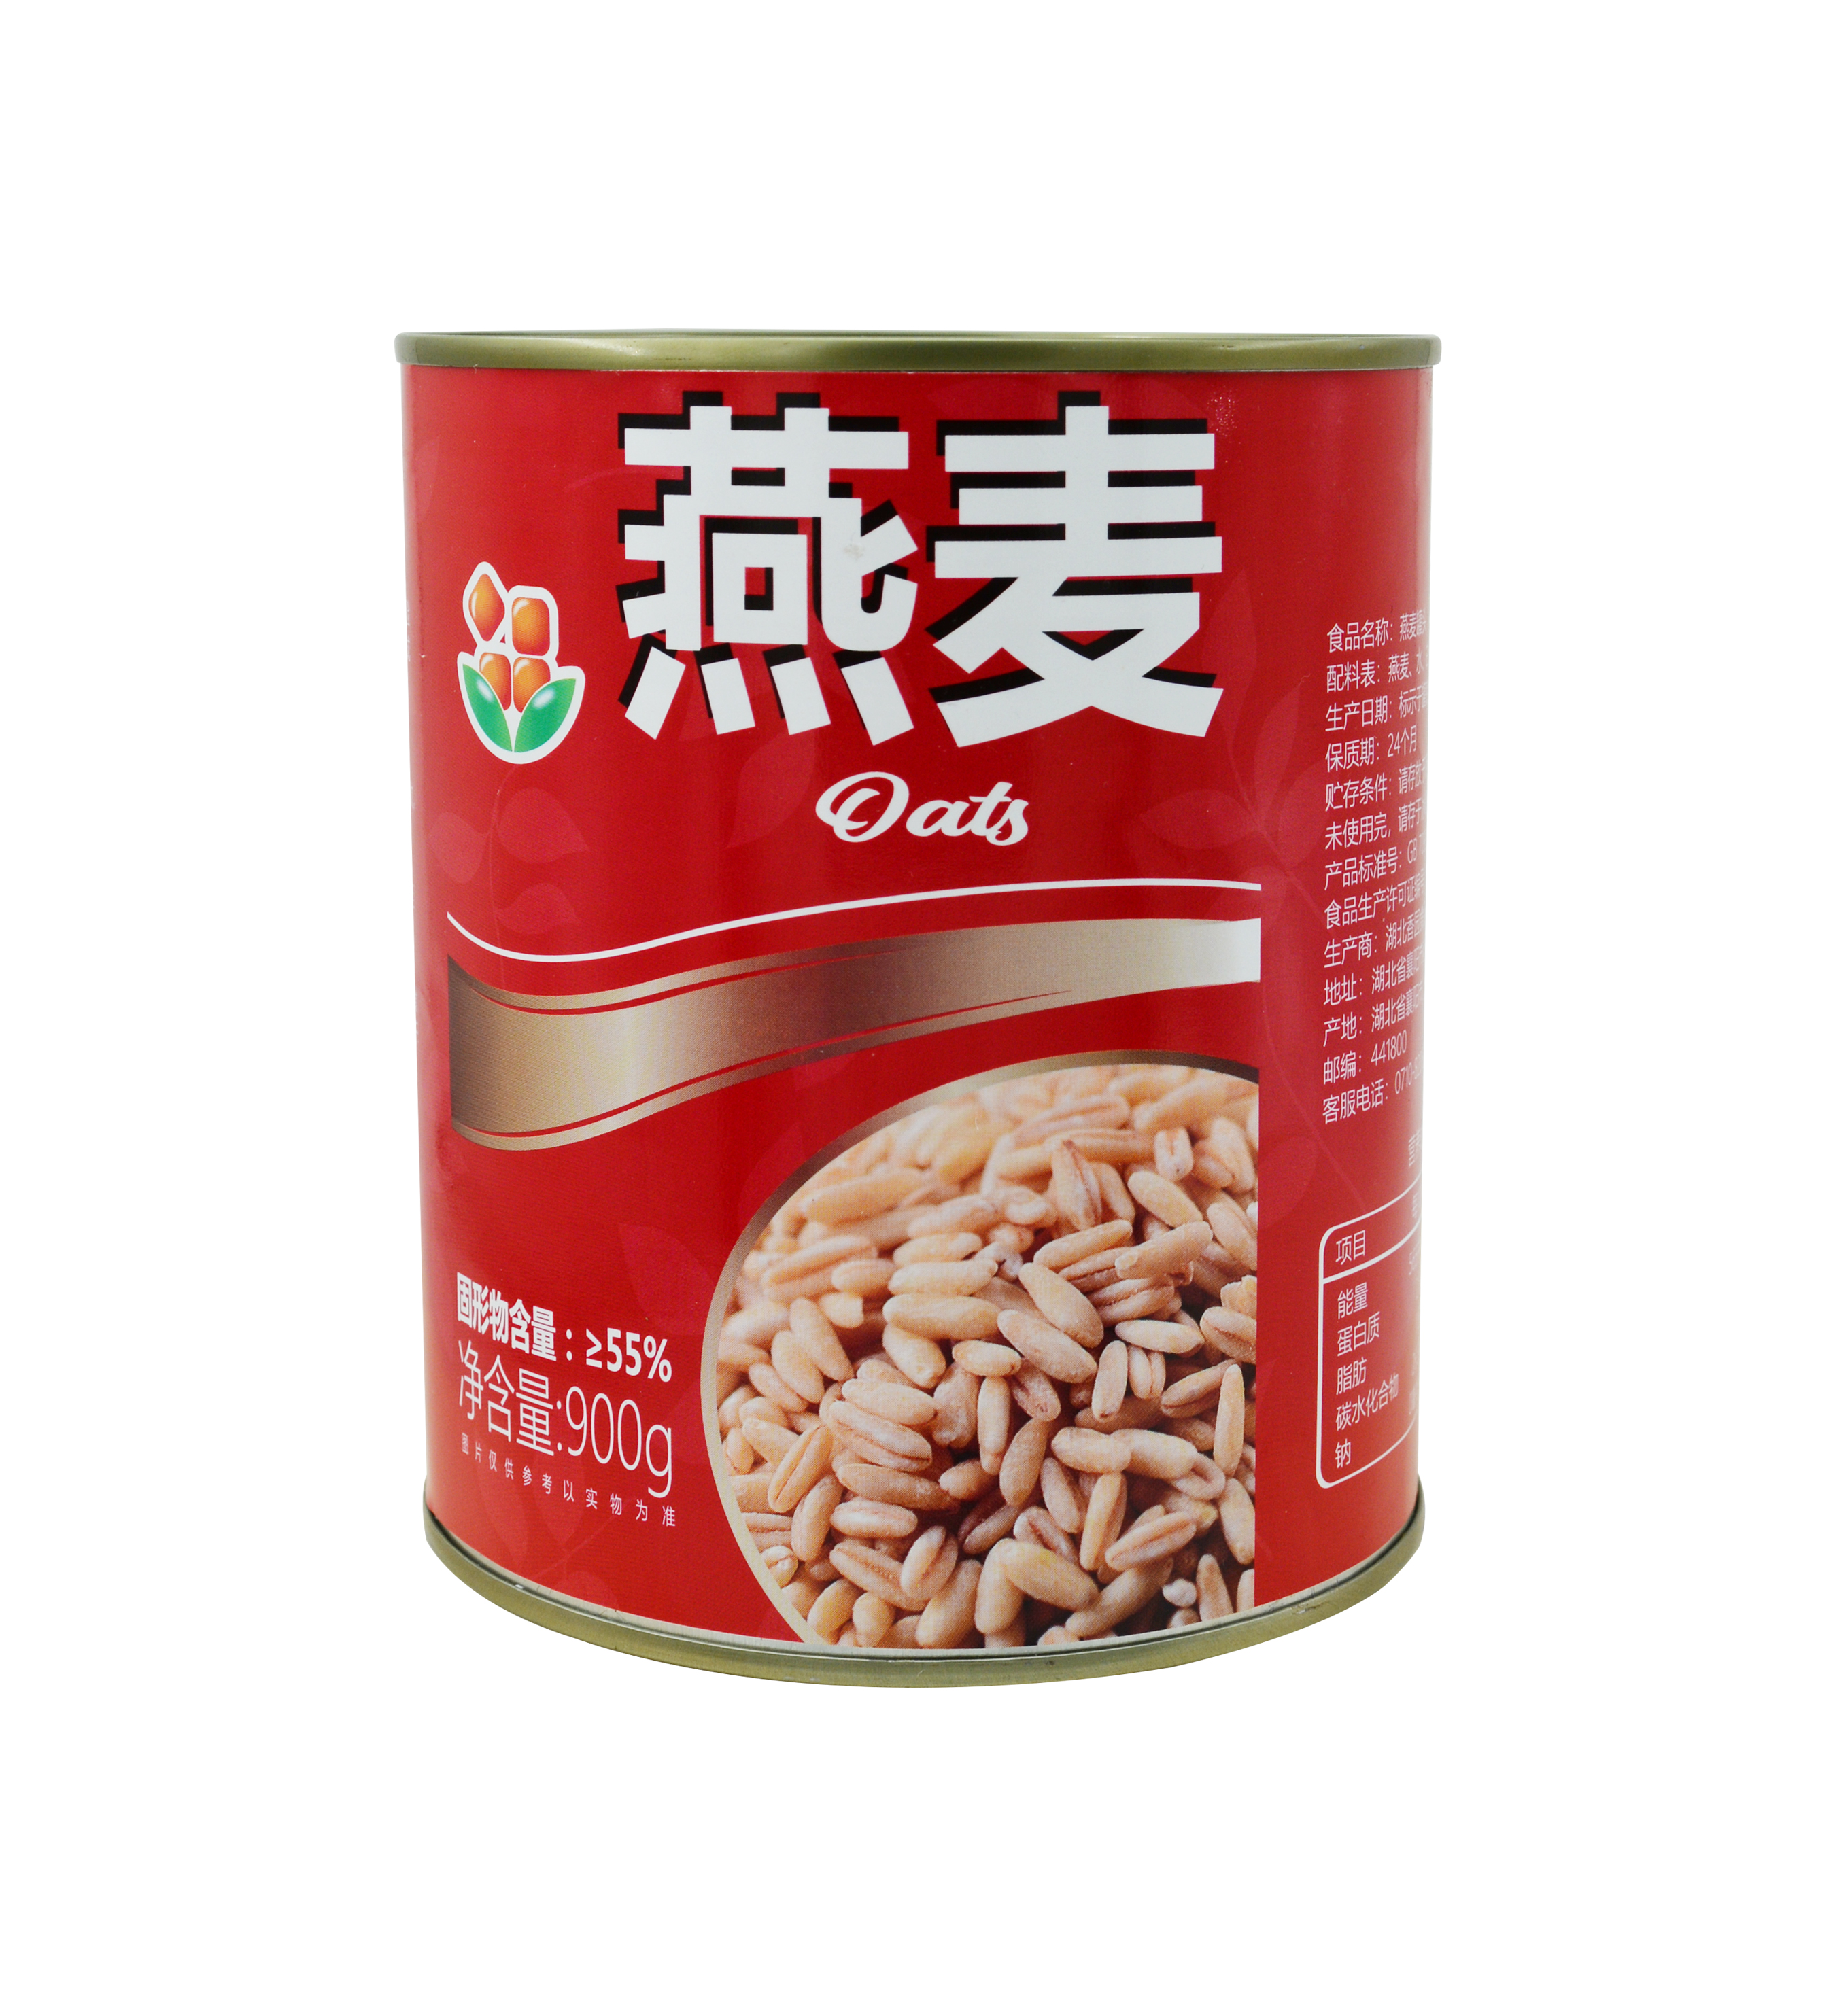 Canned oatmeal